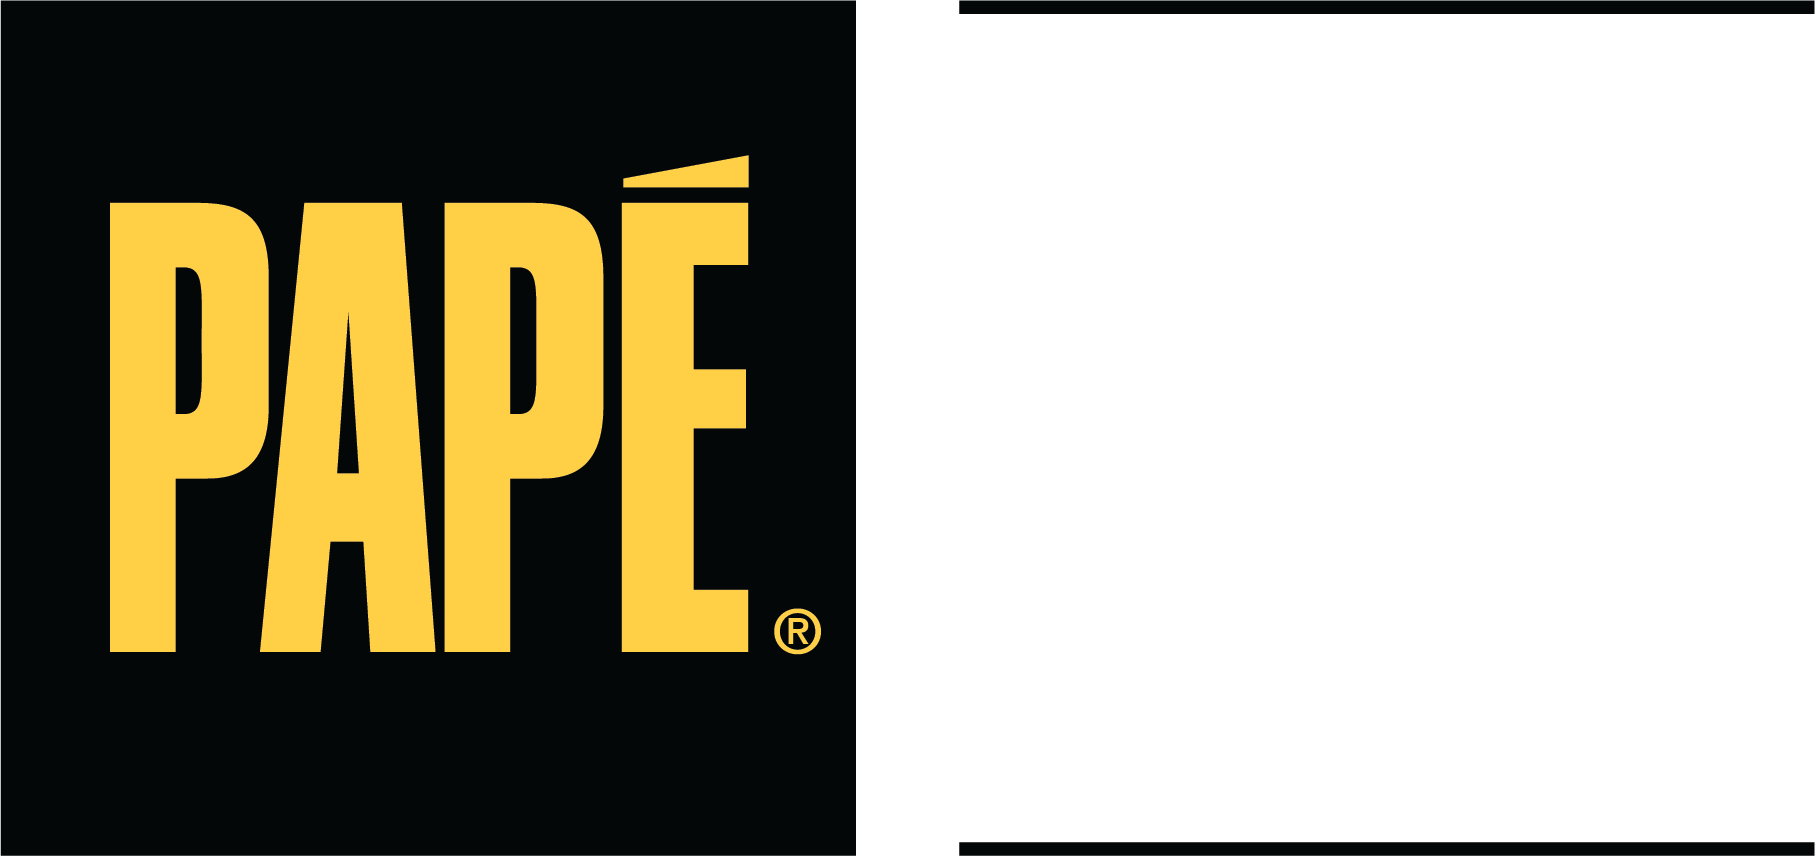 Papé Machinery